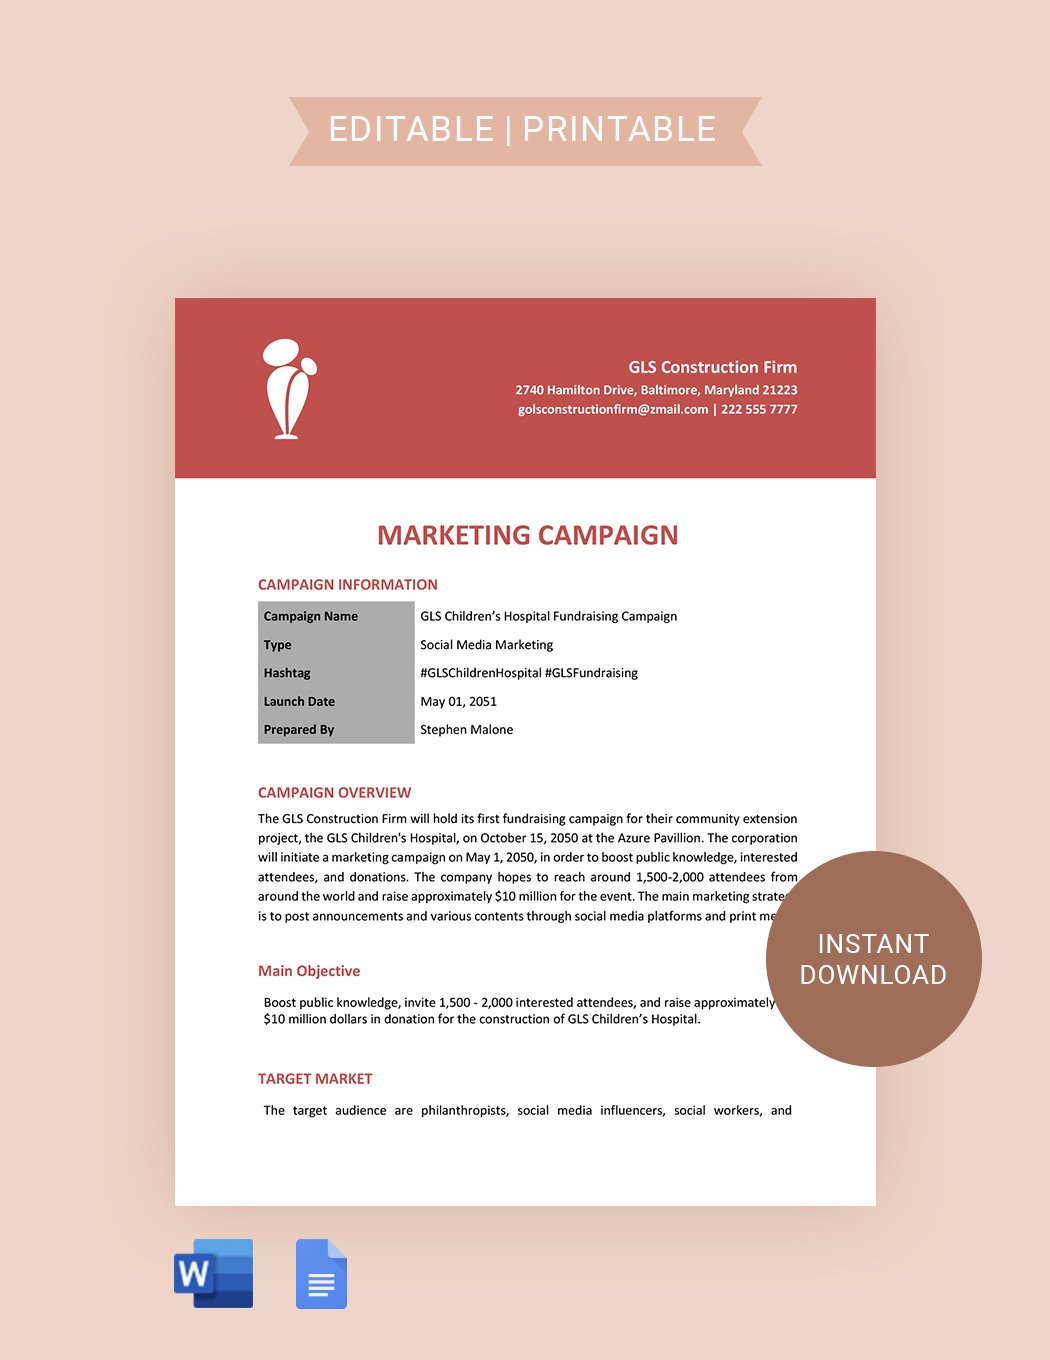 Content Marketing Campaign Template